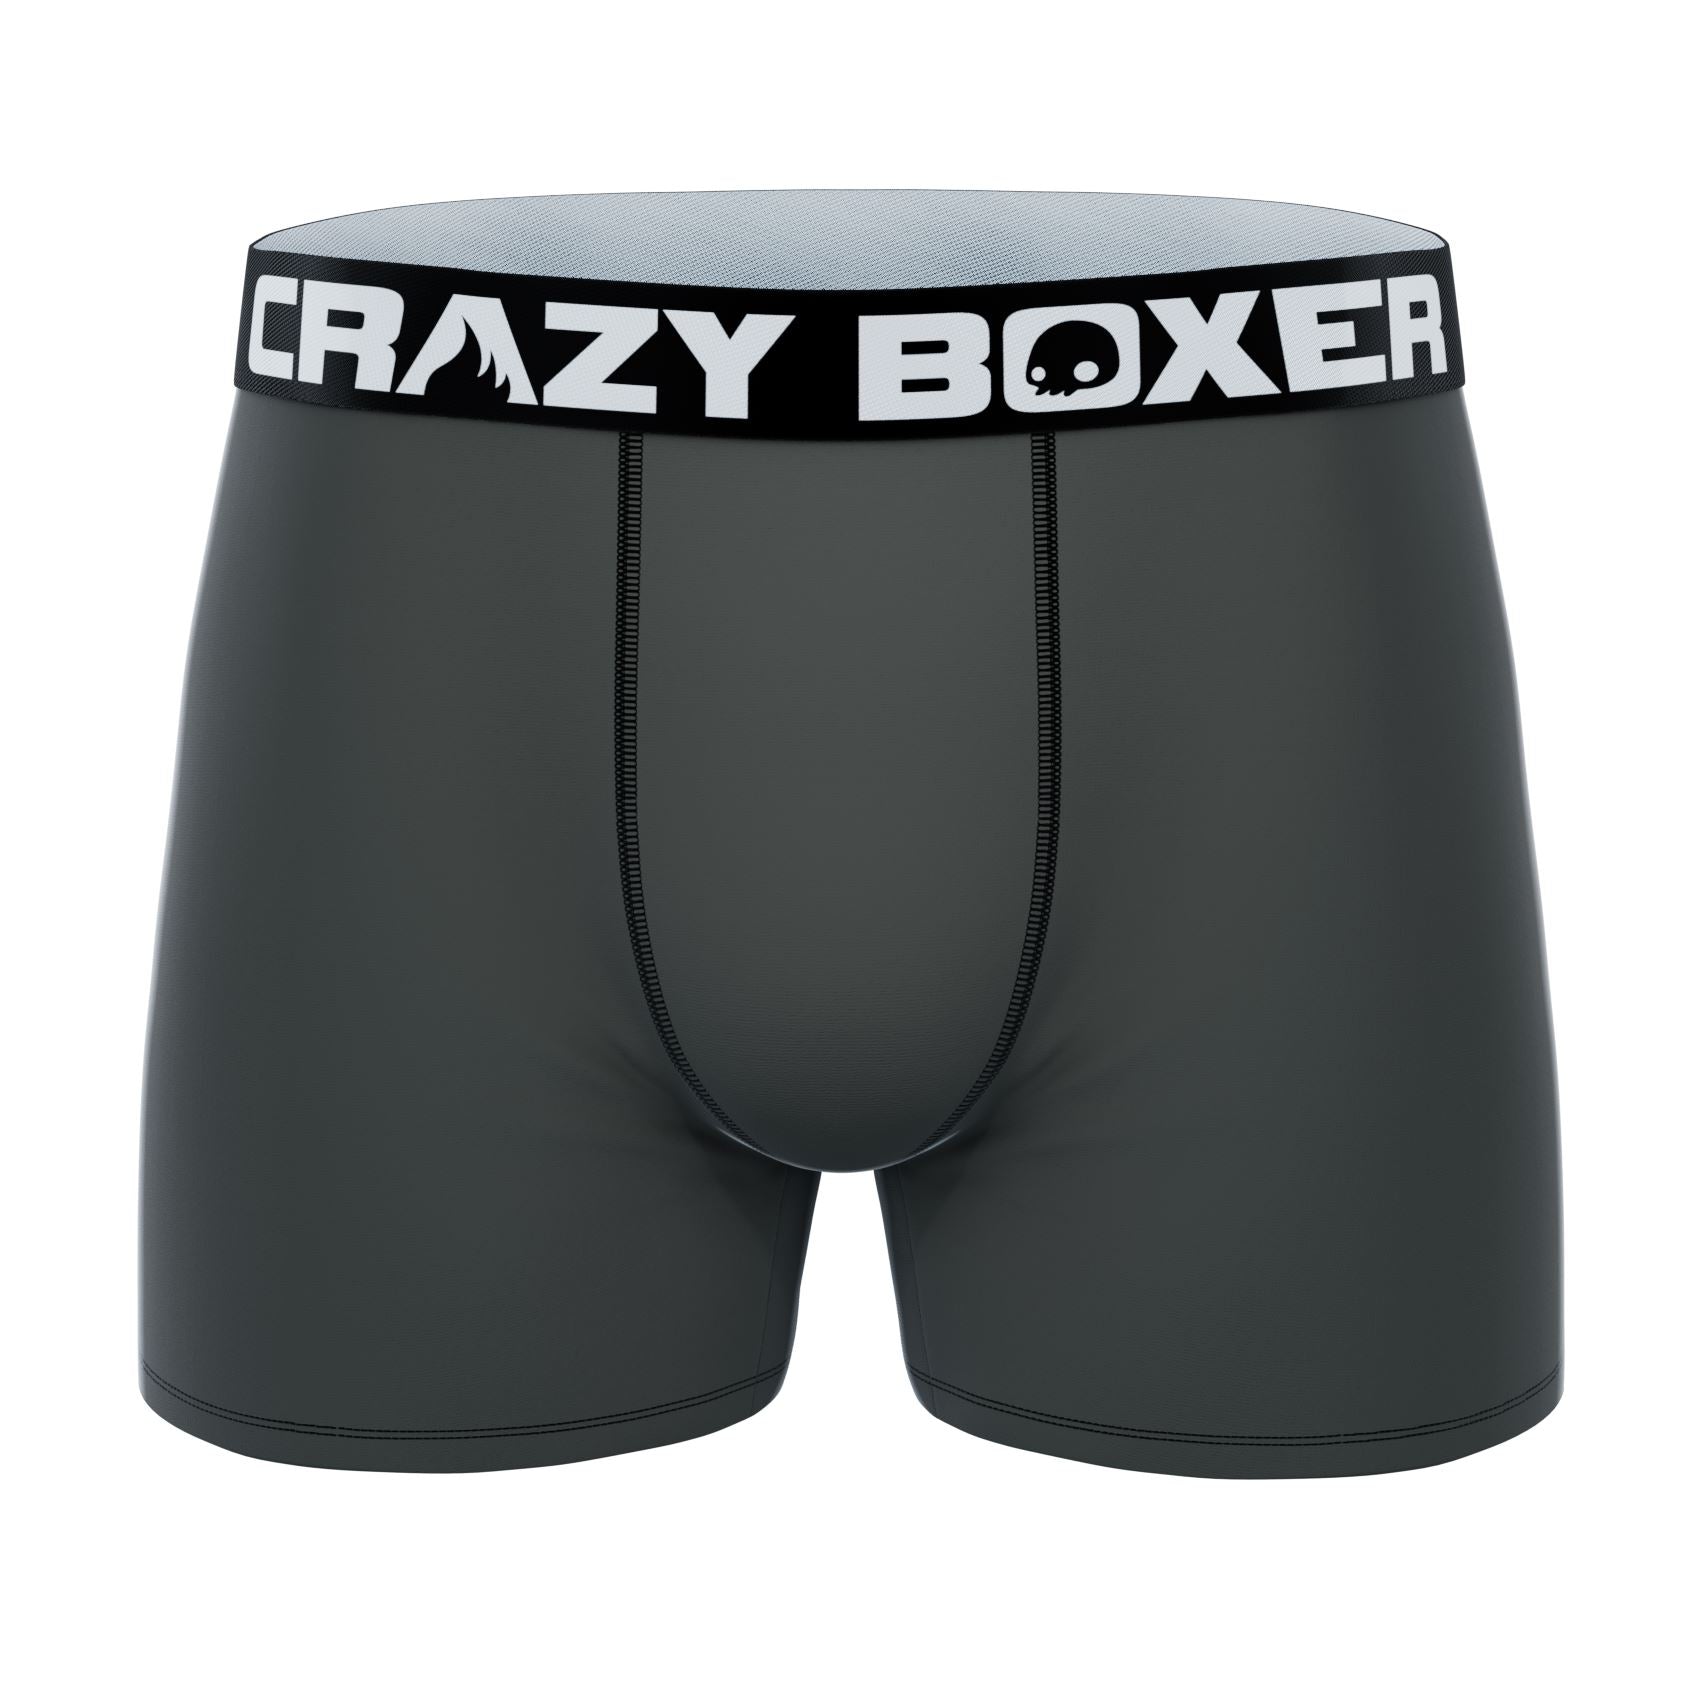 CRAZYBOXER Men's Underwear Star Wars Breathable Resistant Boxer Brief Soft  